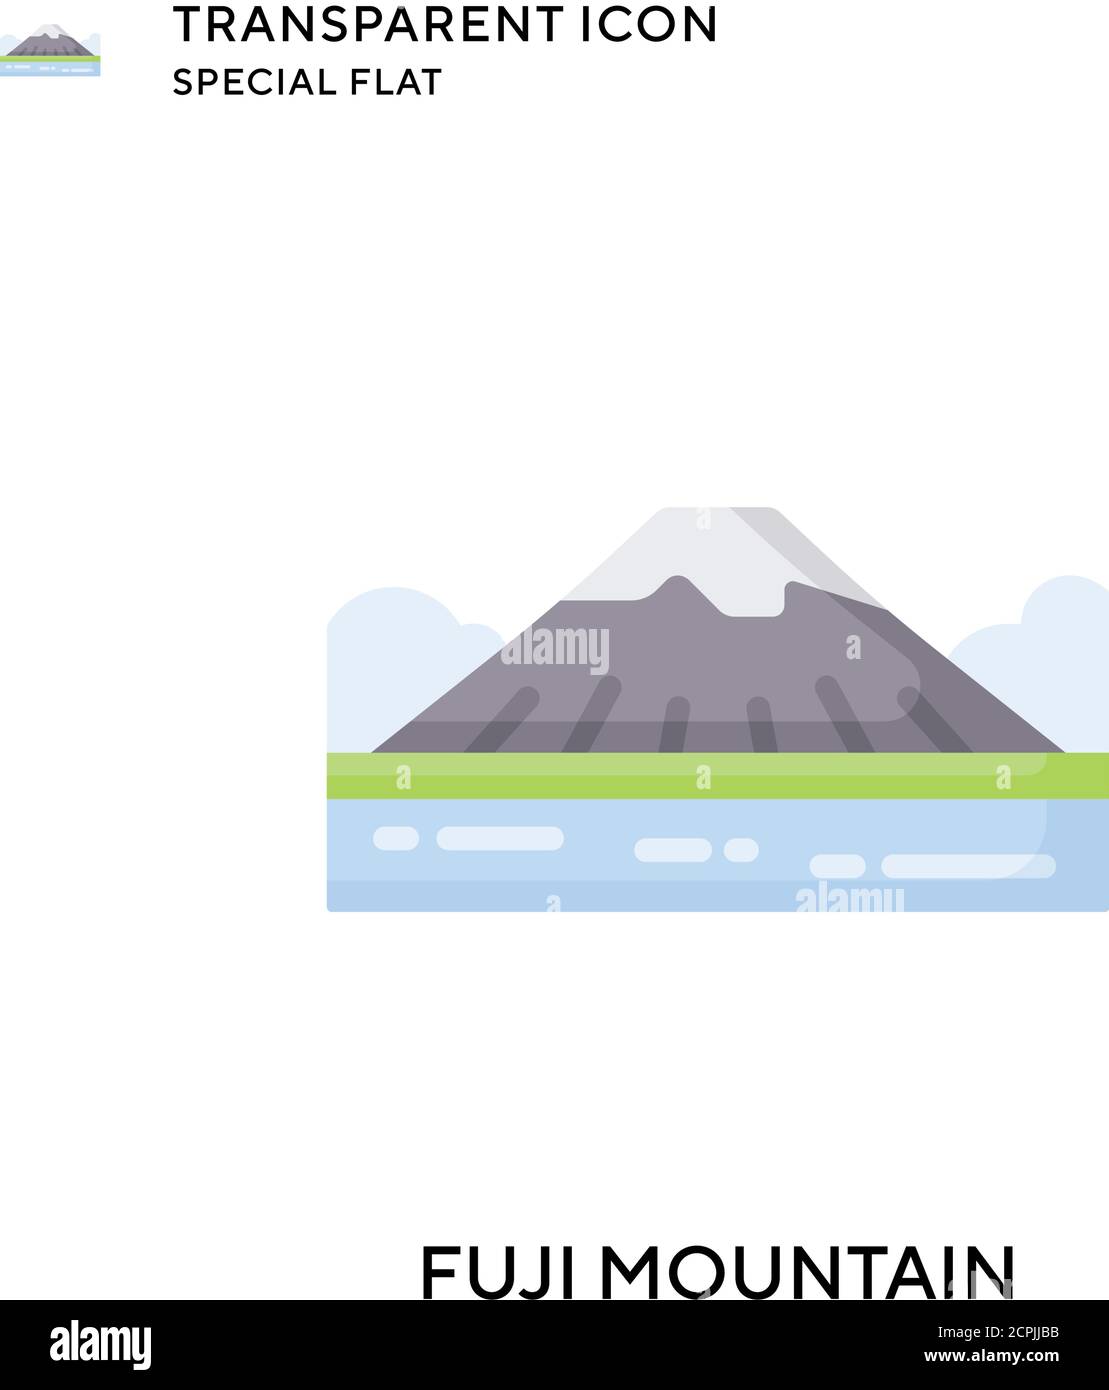 Fuji mountain vector icon. Flat style illustration. EPS 10 vector. Stock Vector